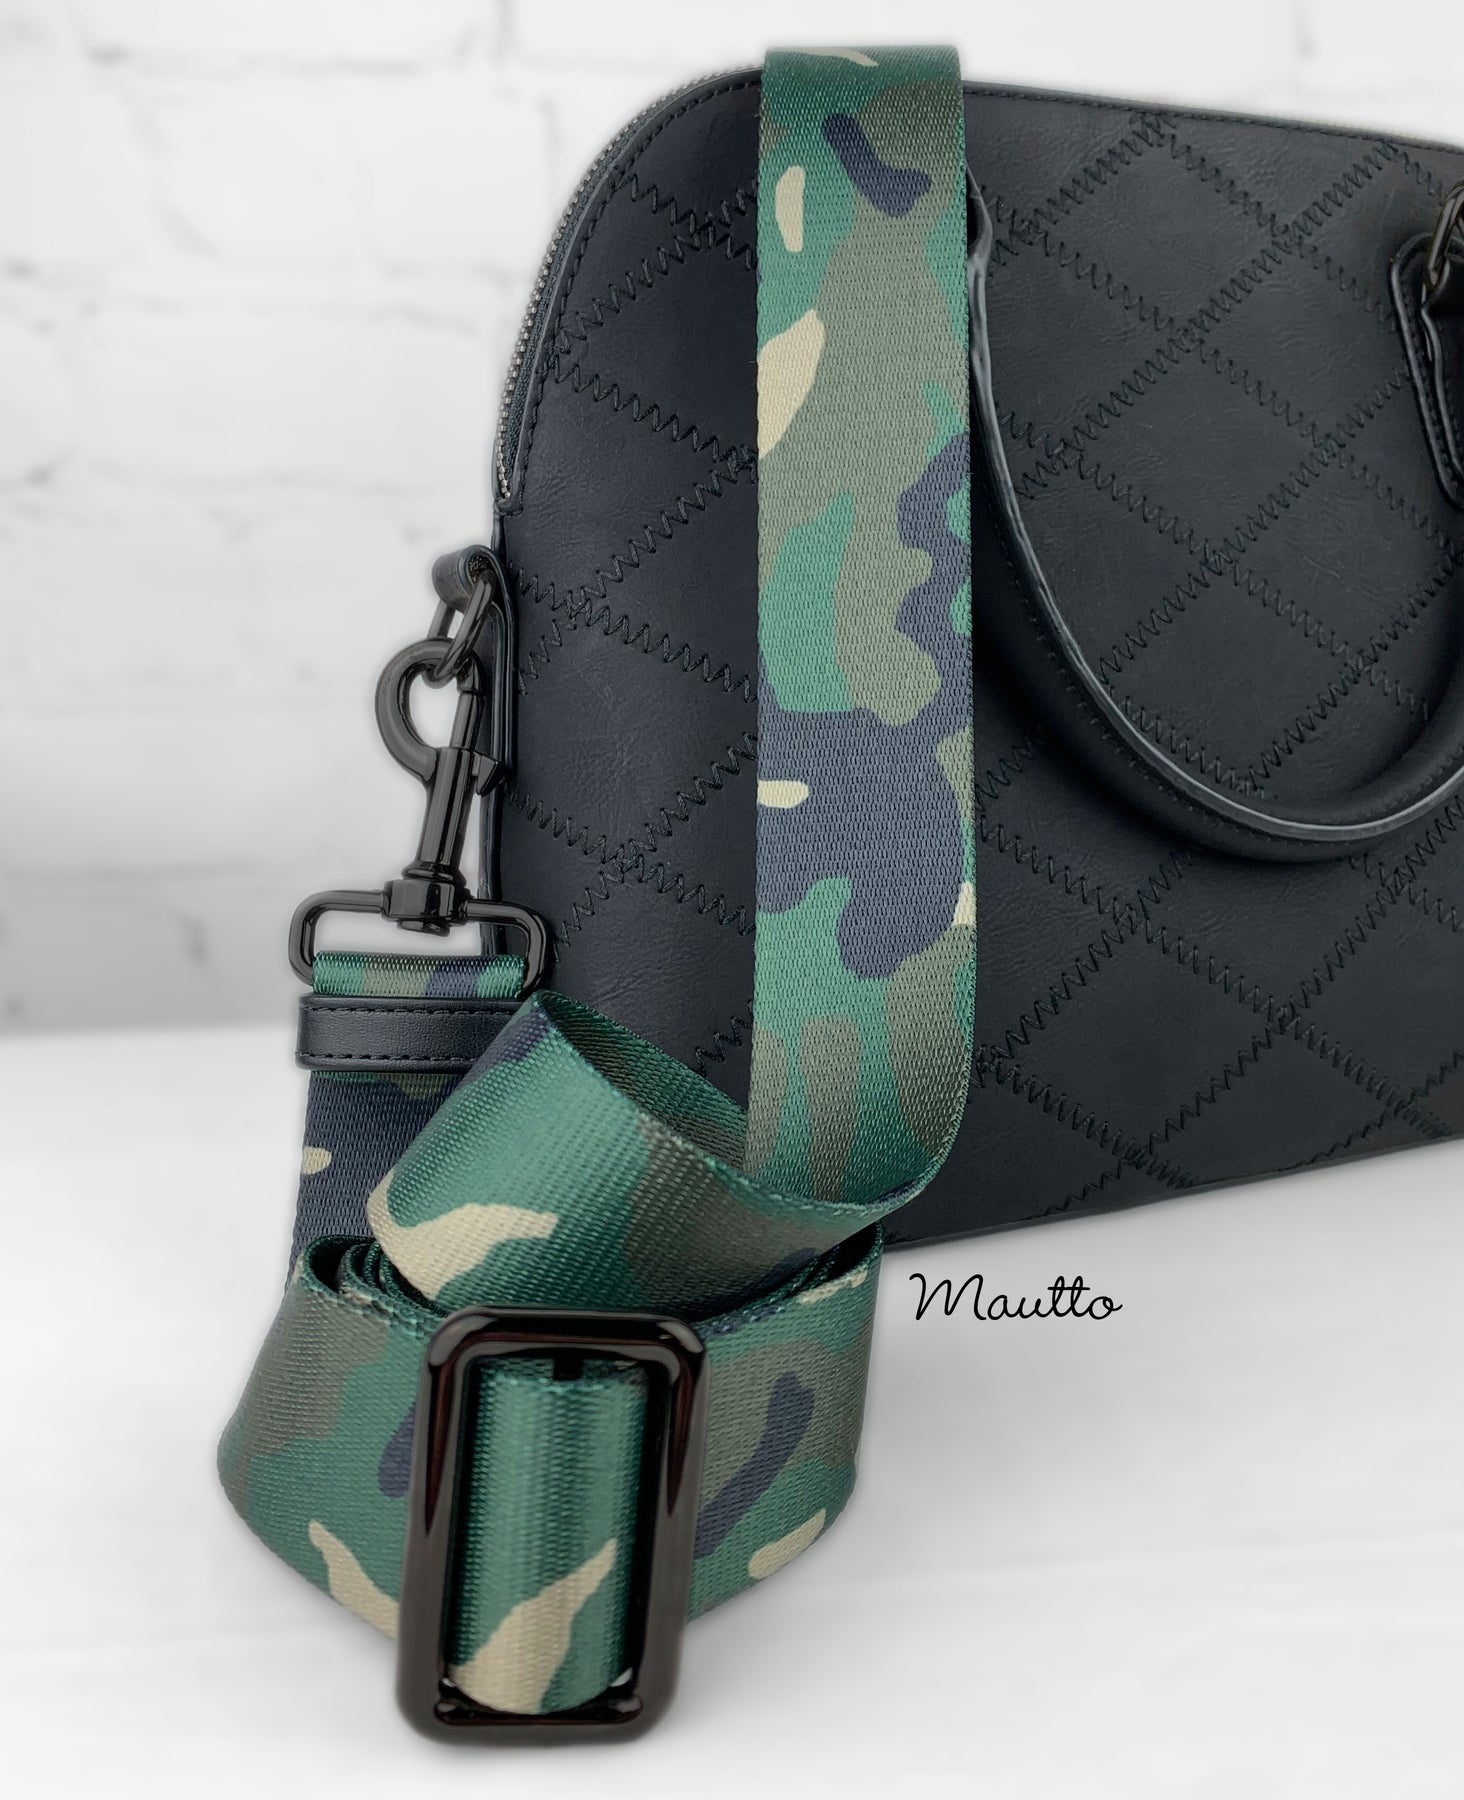 Mautto: Replacement Purse Straps & Handbag Accessories